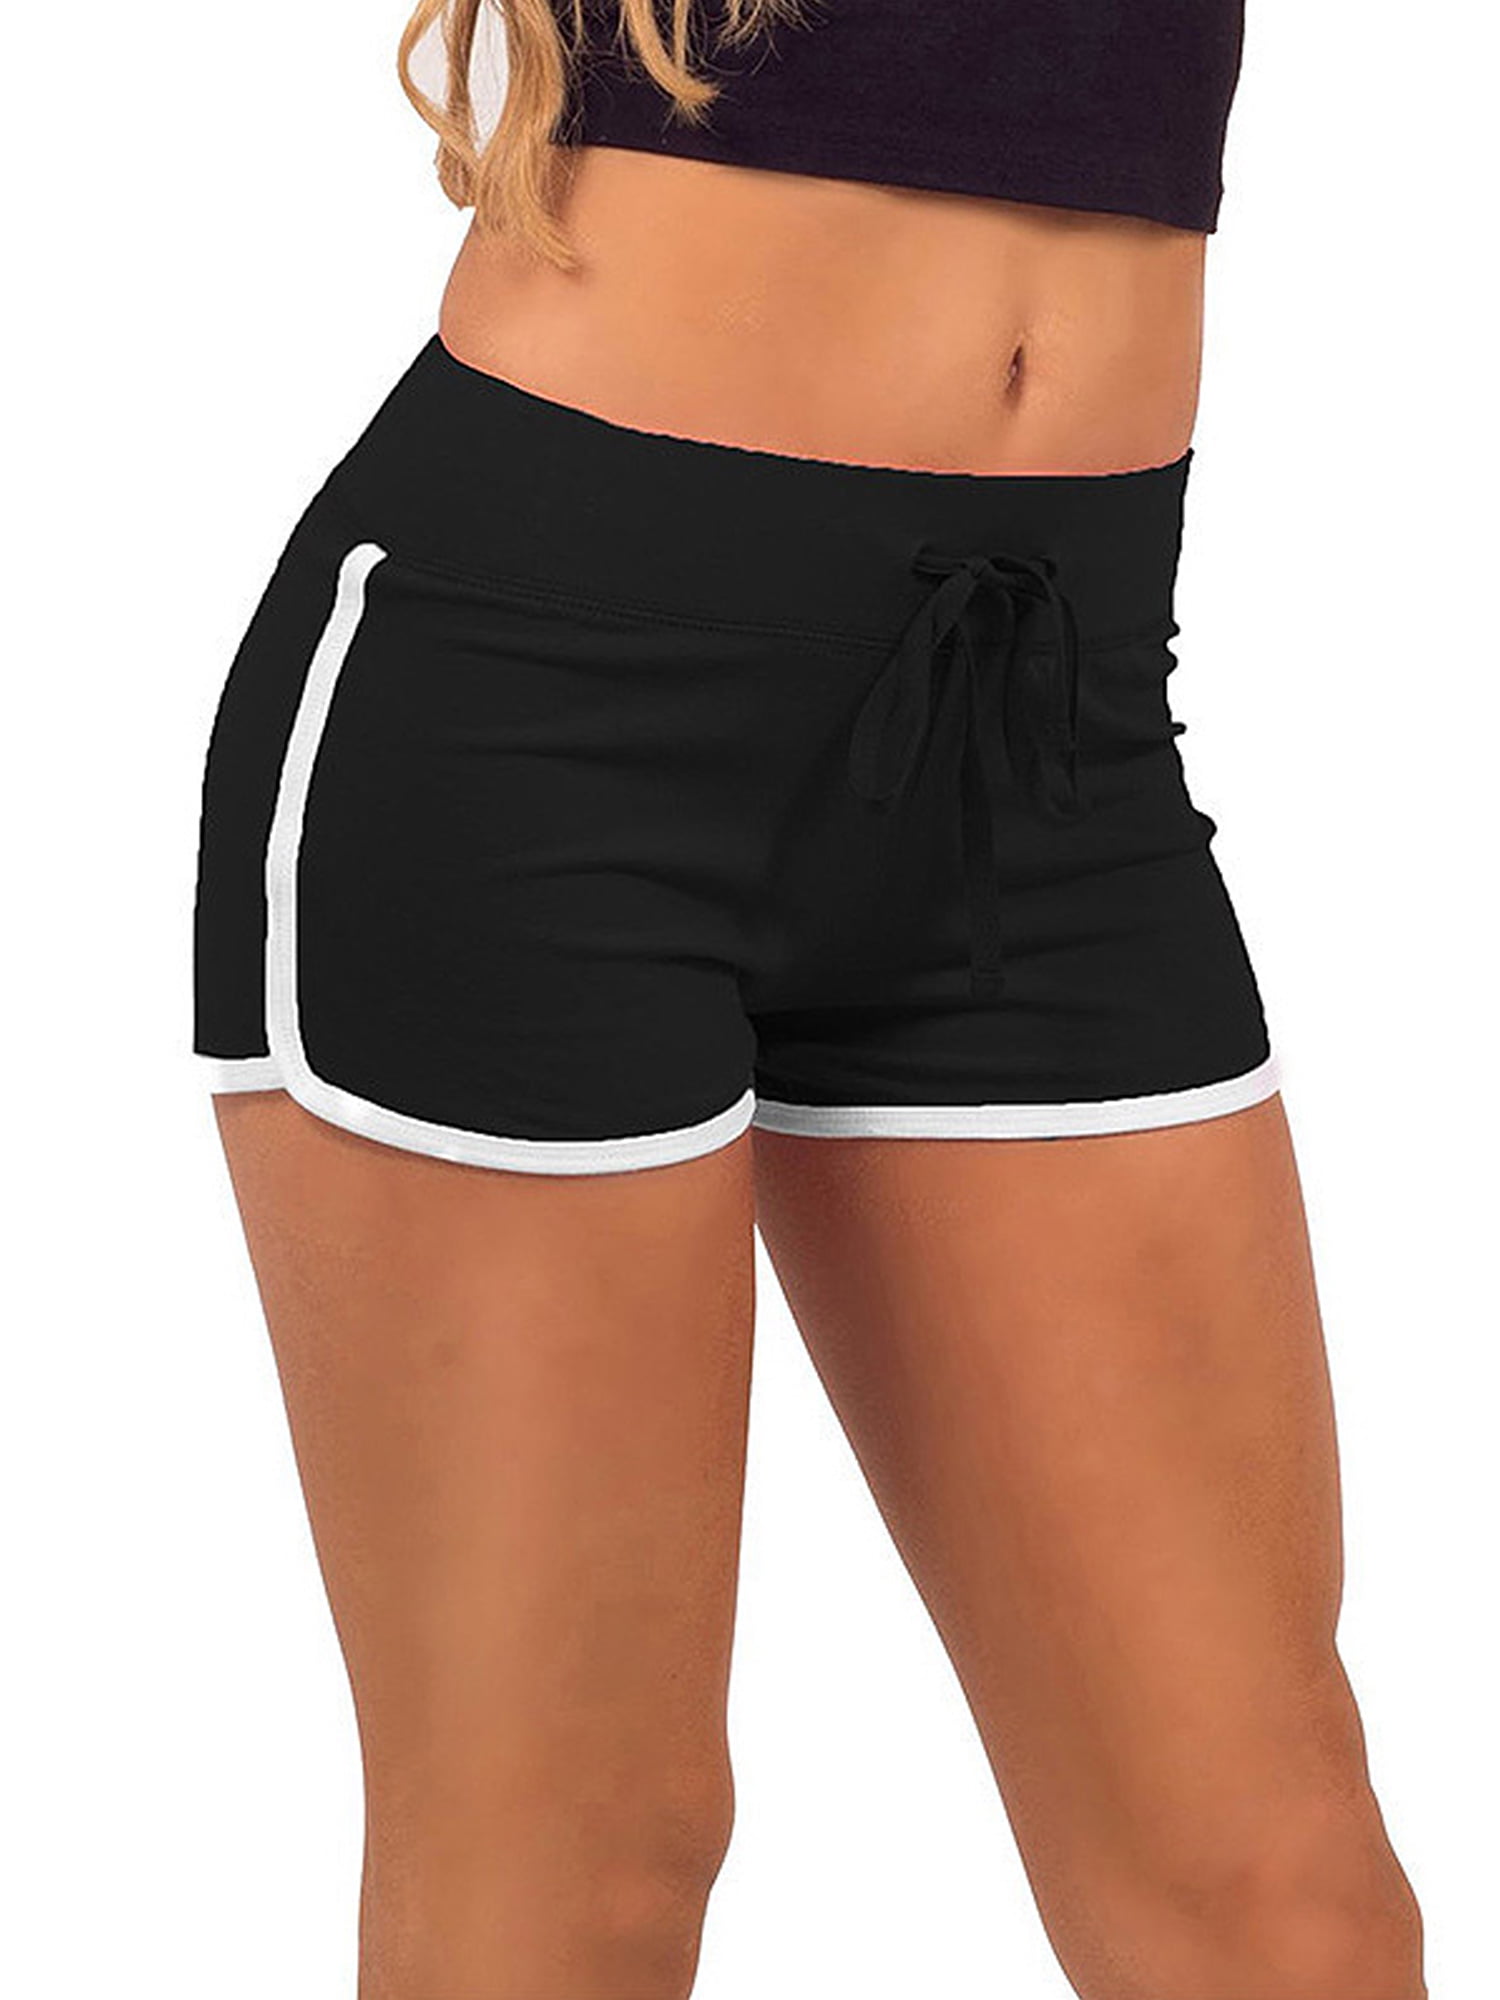 Himone Women Yoga Lounge Shorts Comfy Active Running Shorts Casual Workout Hiking Shorts